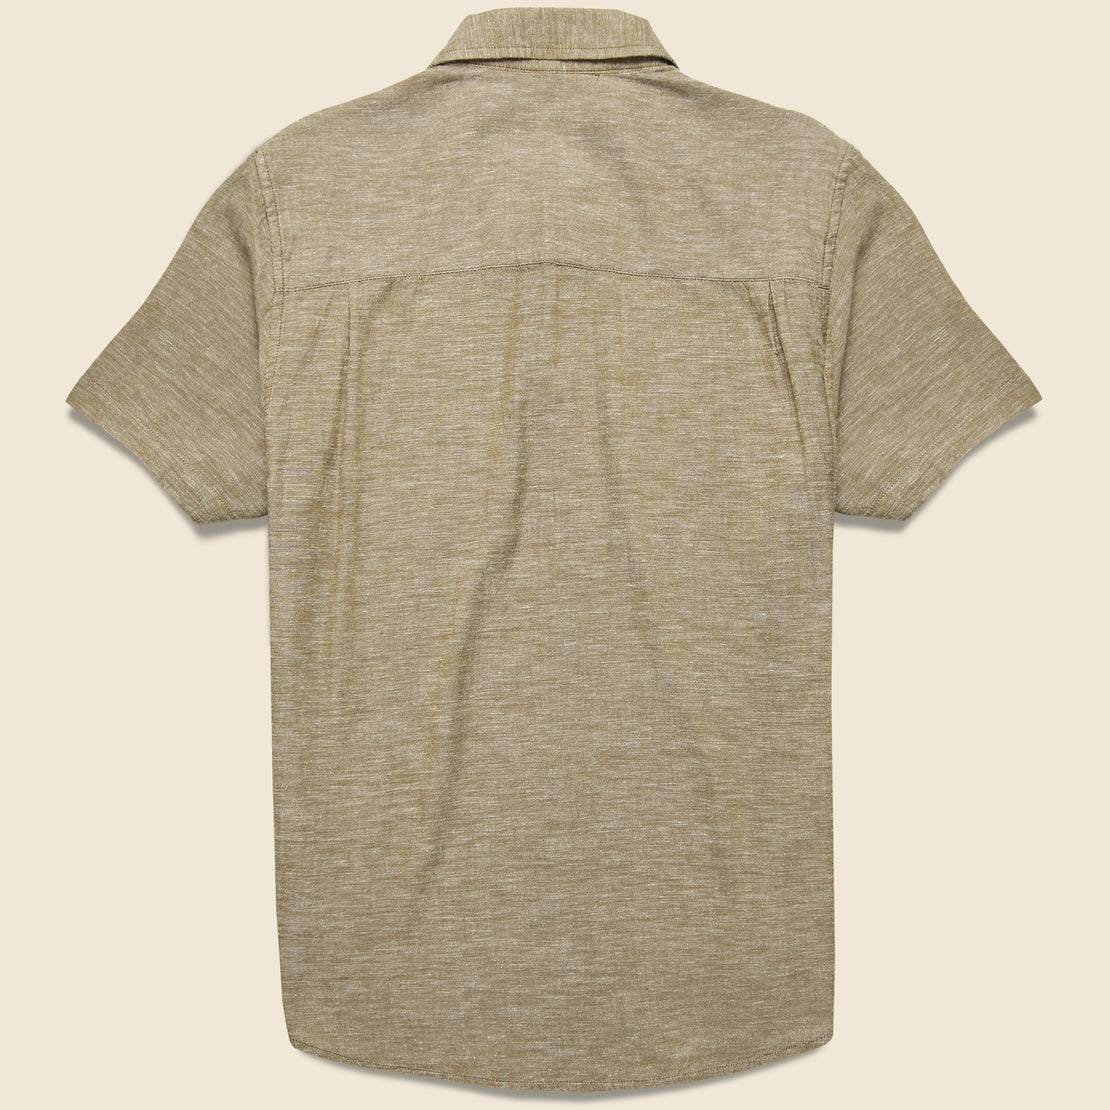 Jordan Shirt - Bronze Chambray - Bridge & Burn - STAG Provisions - Tops - S/S Woven - Solid